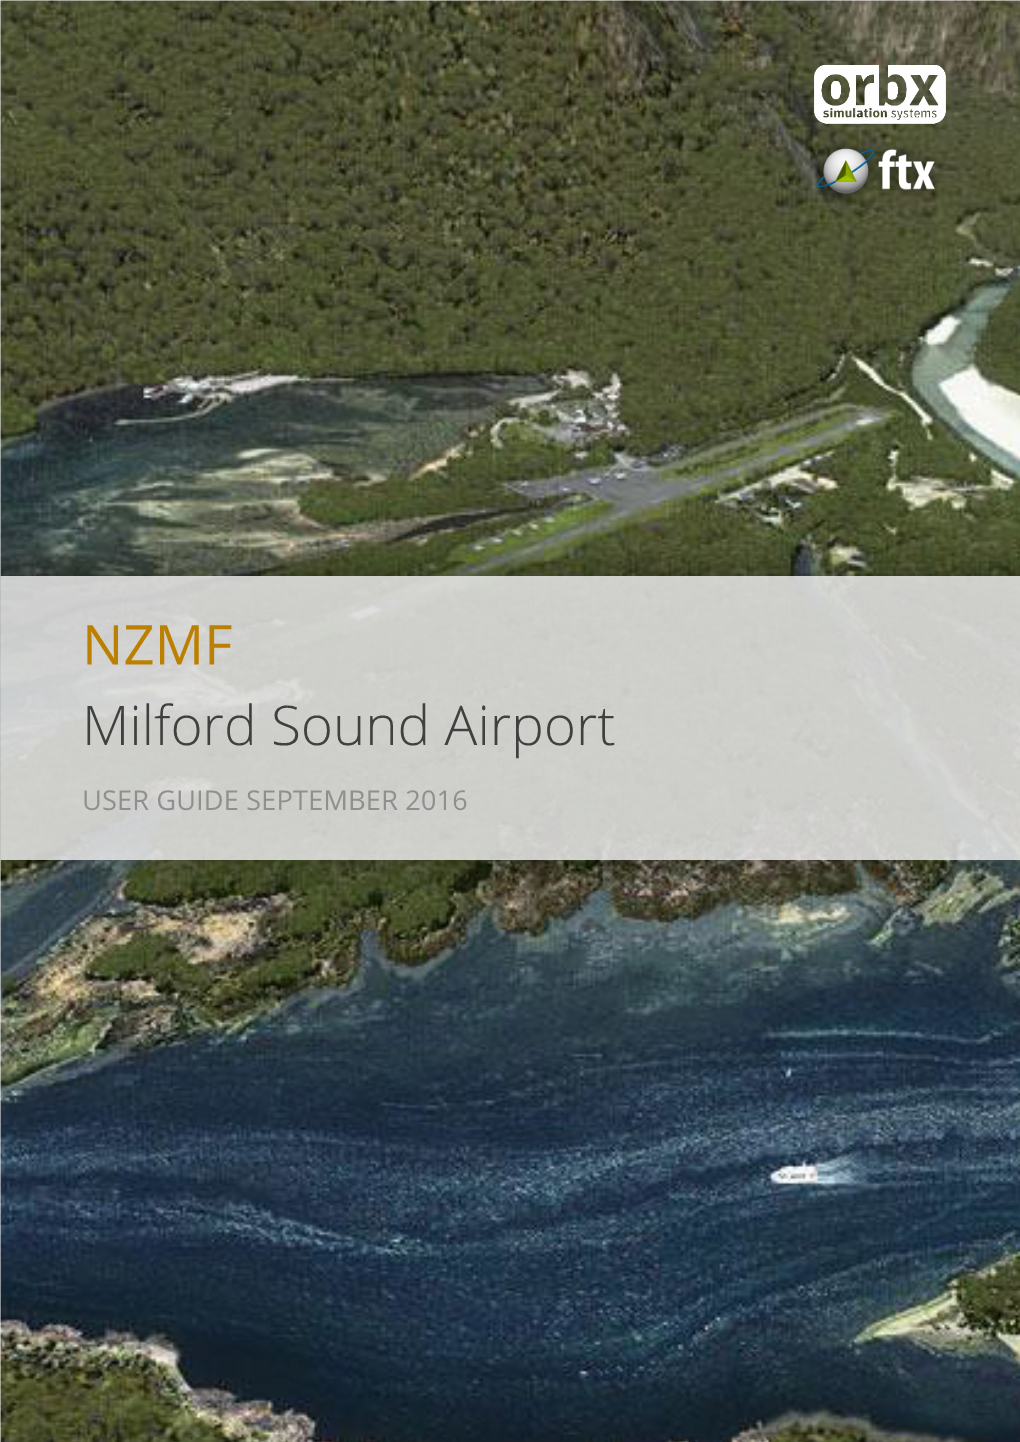 NZMF Milford Sound Airport